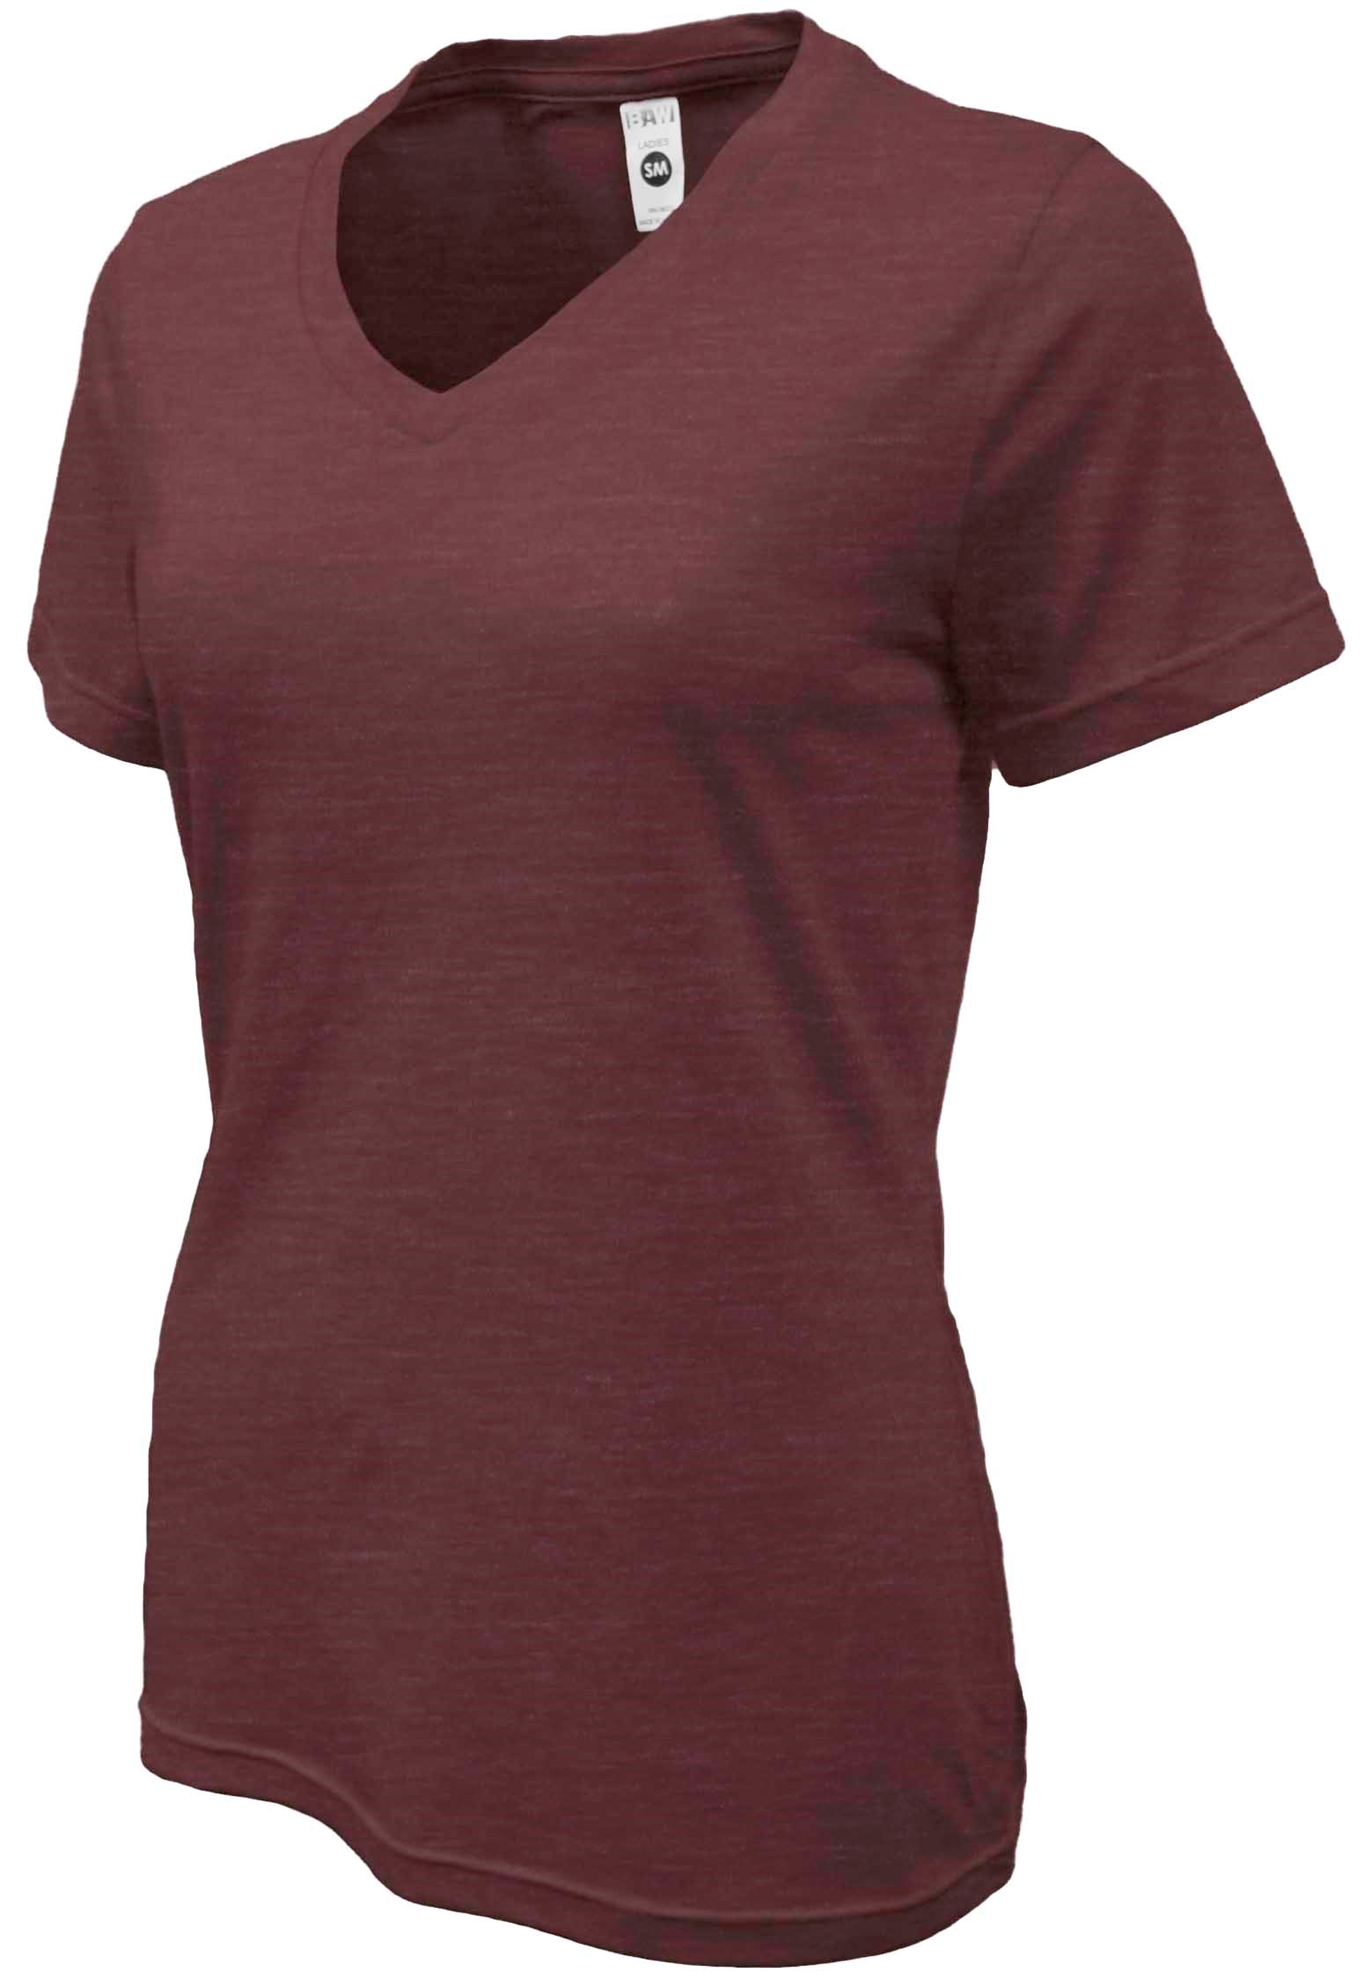 BAW Athletic Wear DT87 - Ladies Long Sleeve Dry-Tek V-Neck T-Shirt $11.20 -  T-Shirts